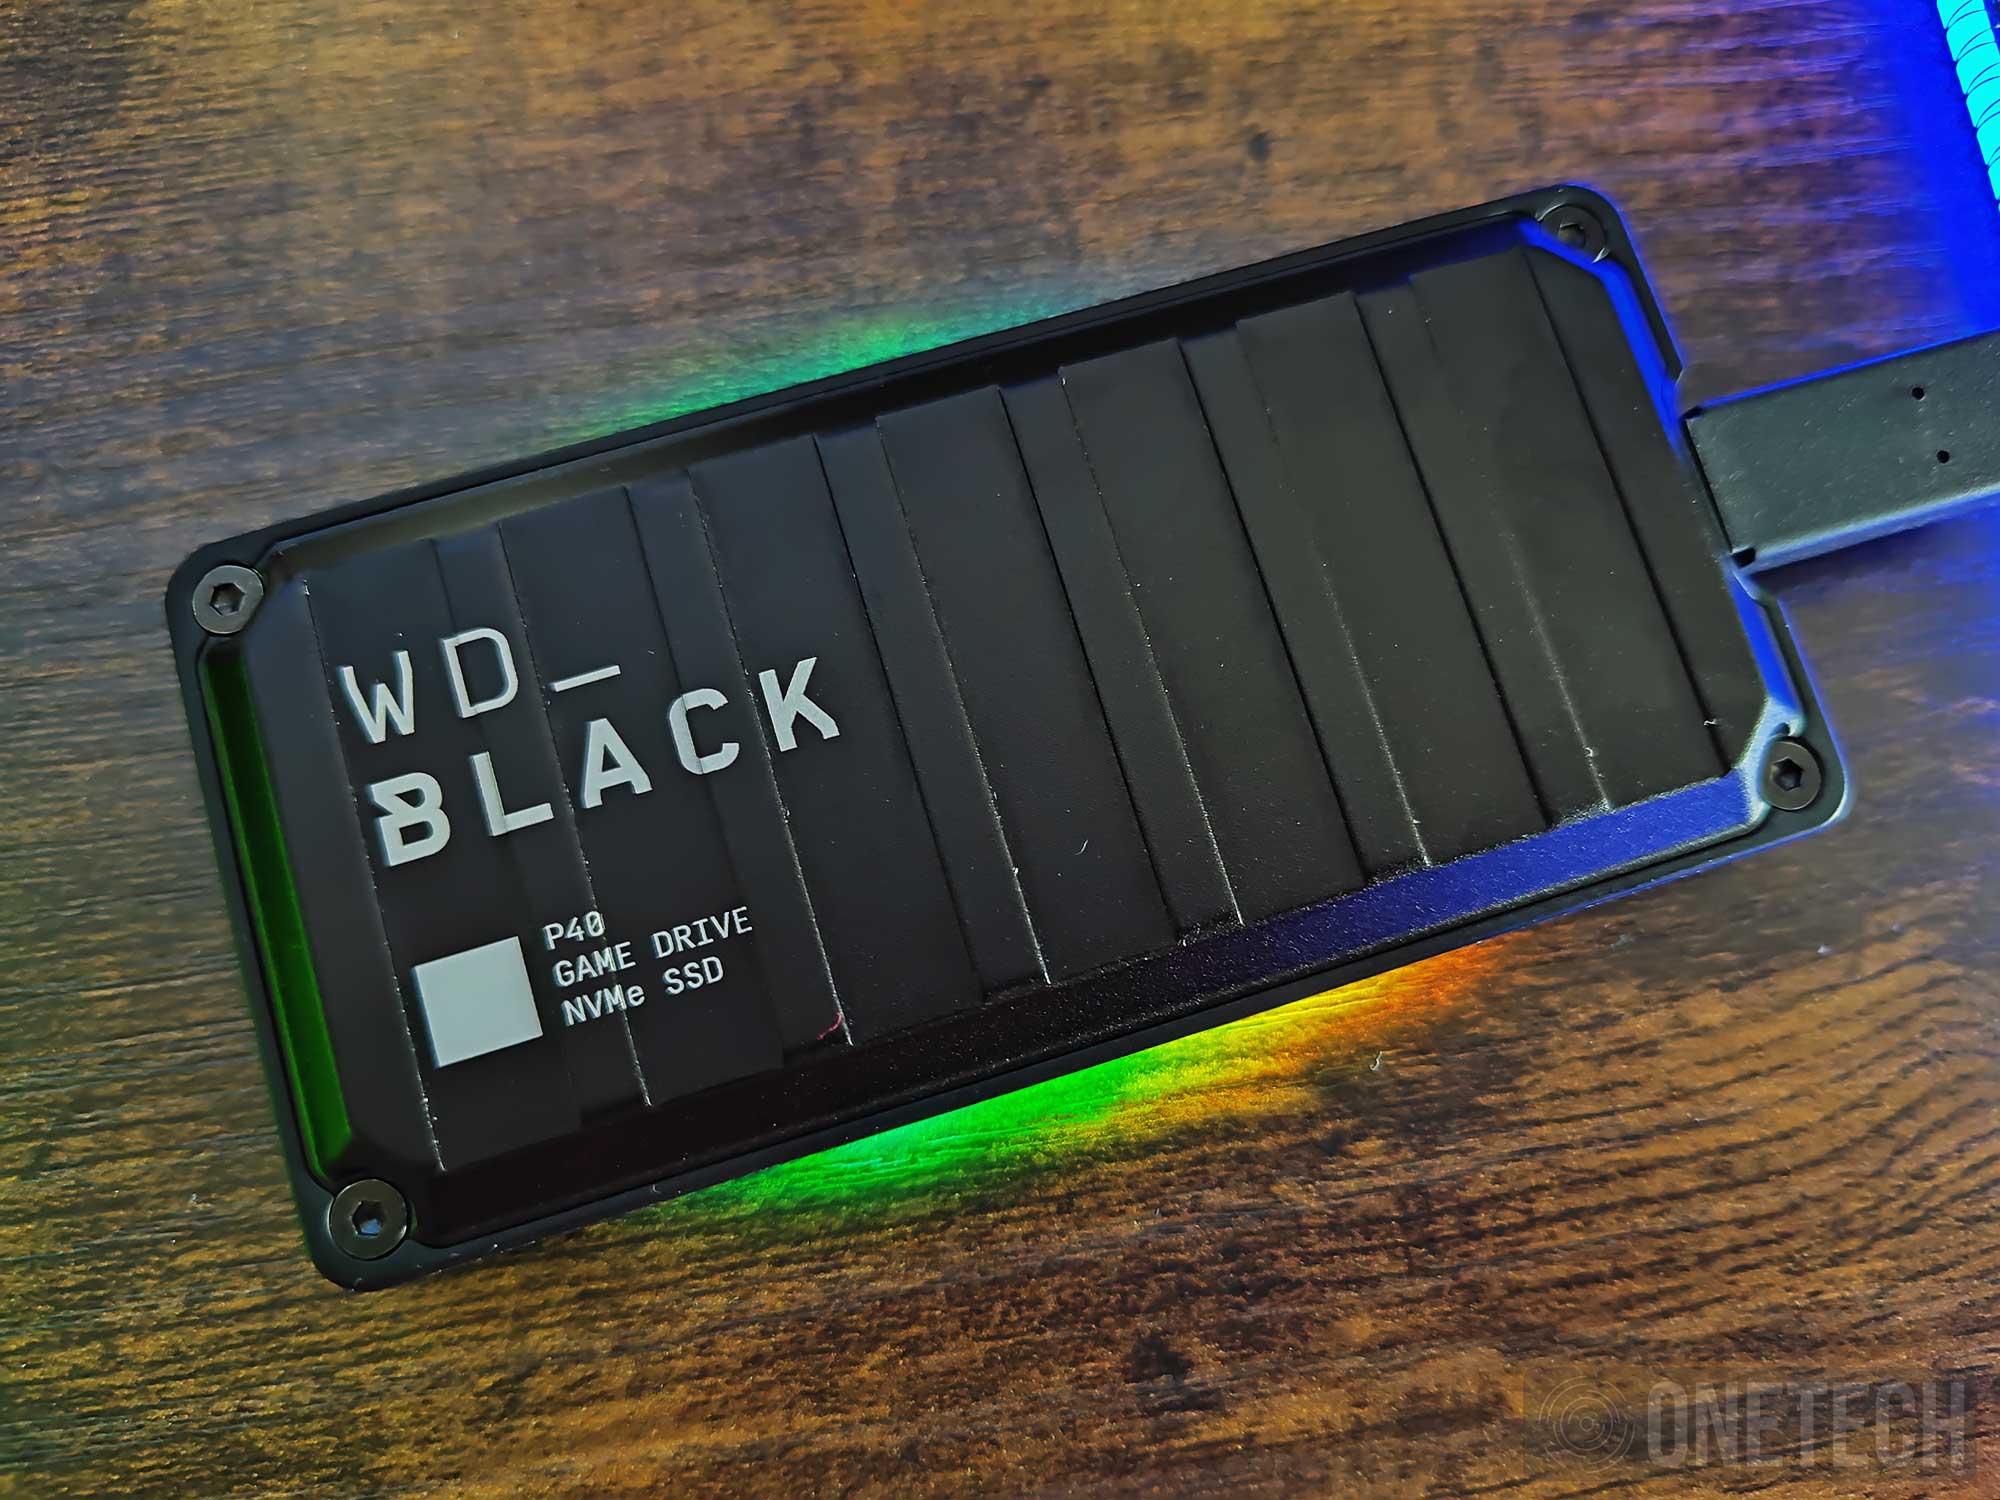 WD BLACK P40 Game Drive, SSD externo con RGB - Análisis 17